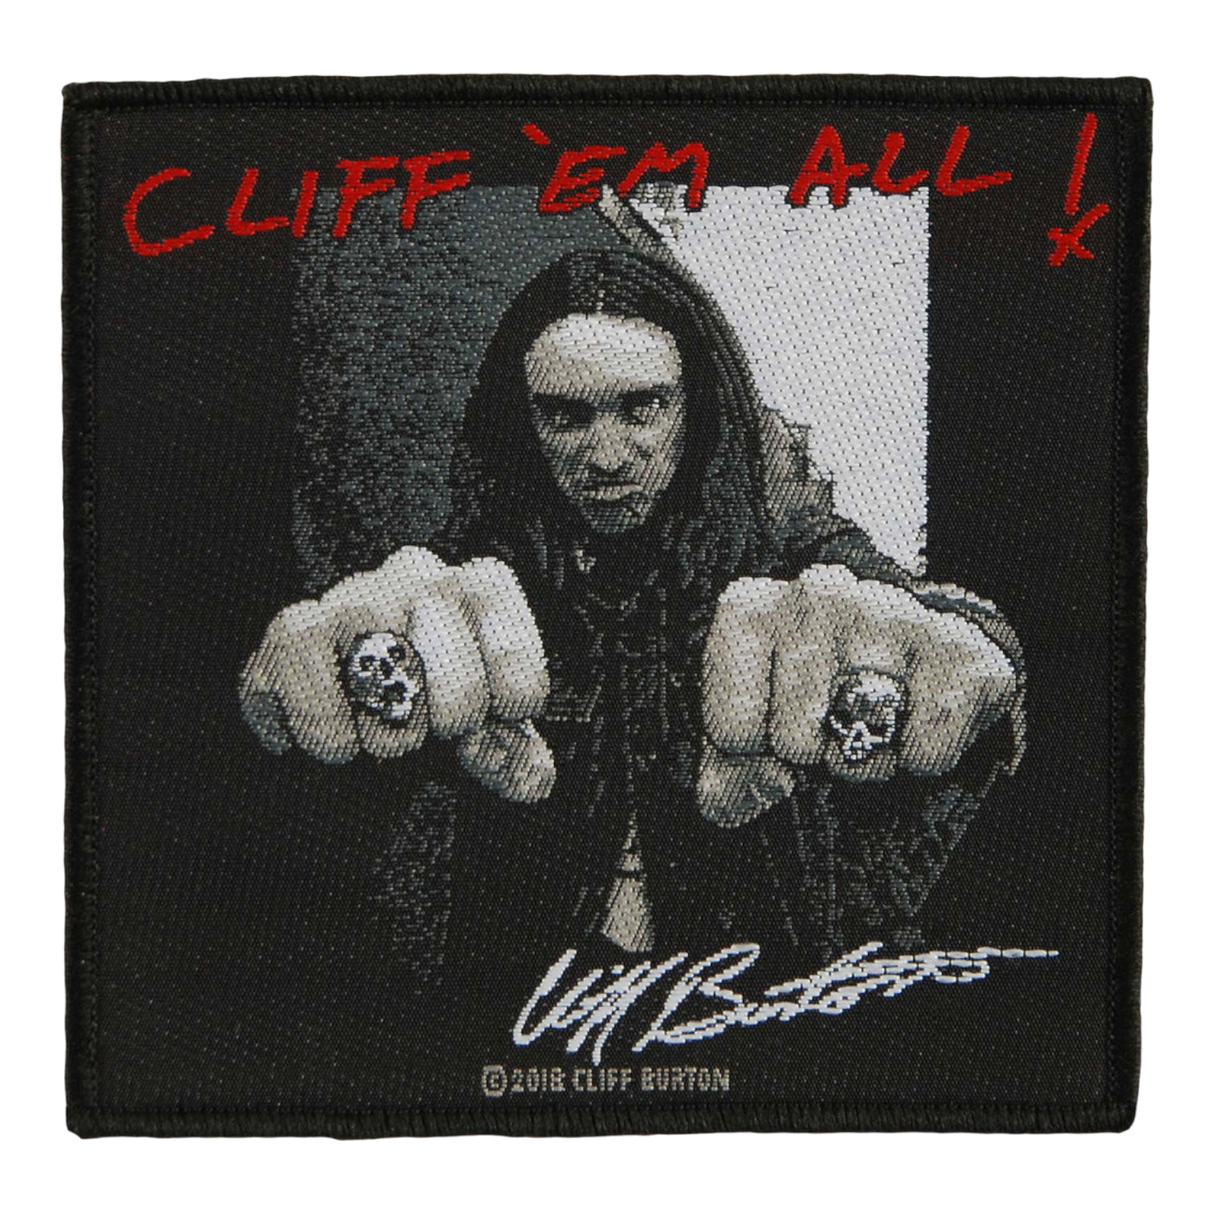 Metallica Patch - Cliff 'Em All